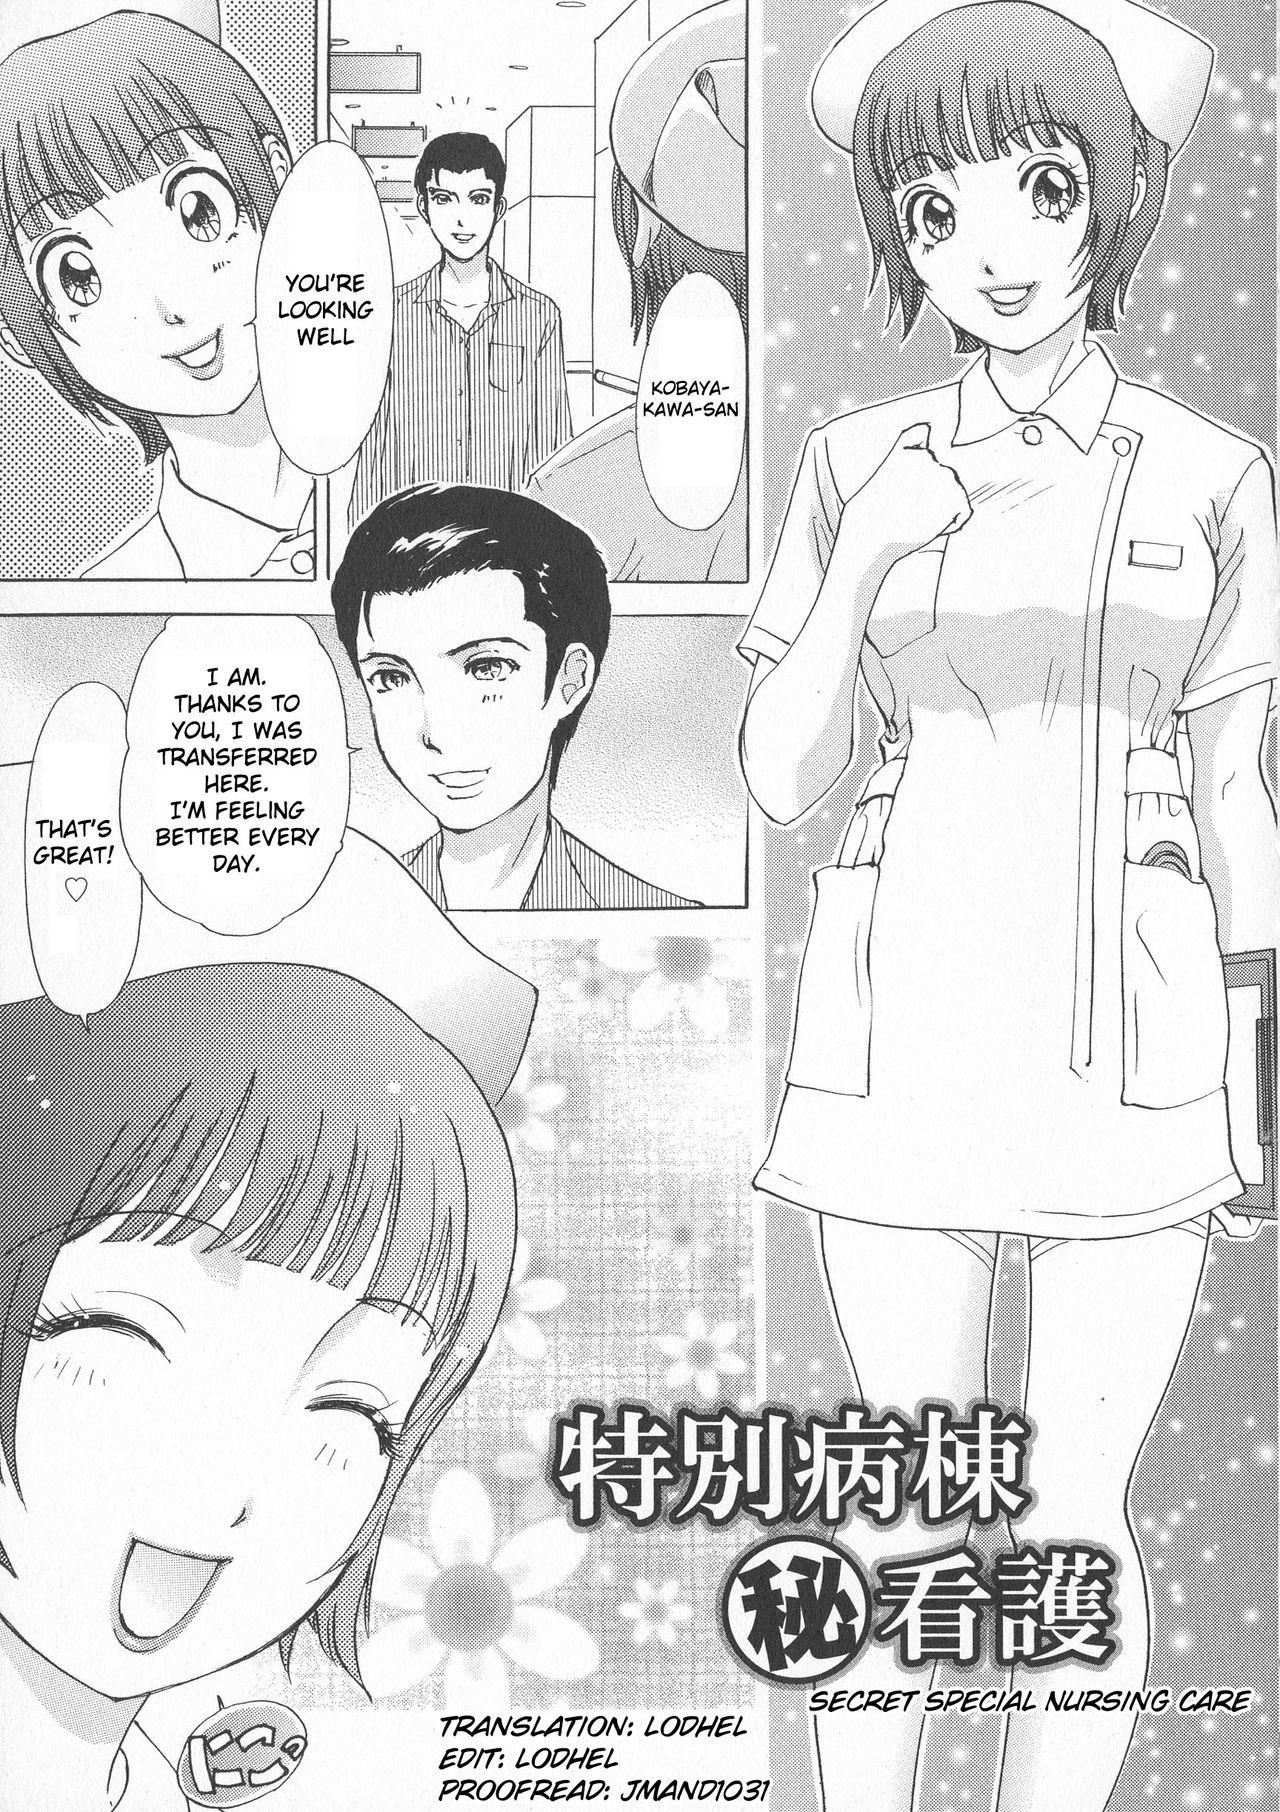 Femboy Tokubetsu byoutou hi kango | Secret Special Nursing Care Ex Girlfriends - Page 1